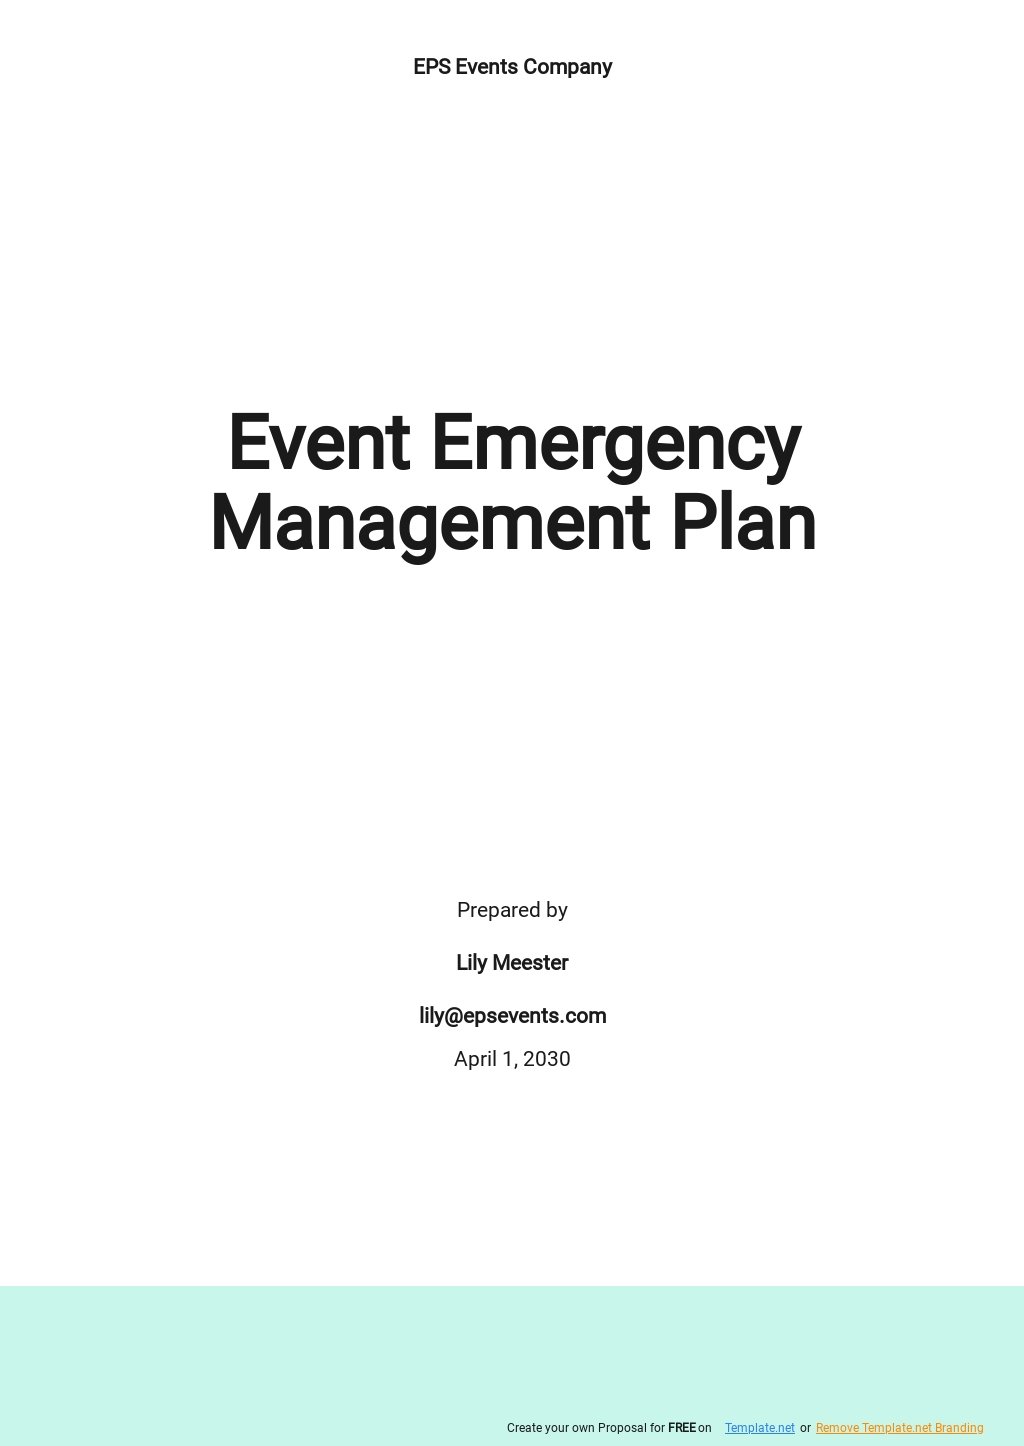 Event Emergency Management Plan Template